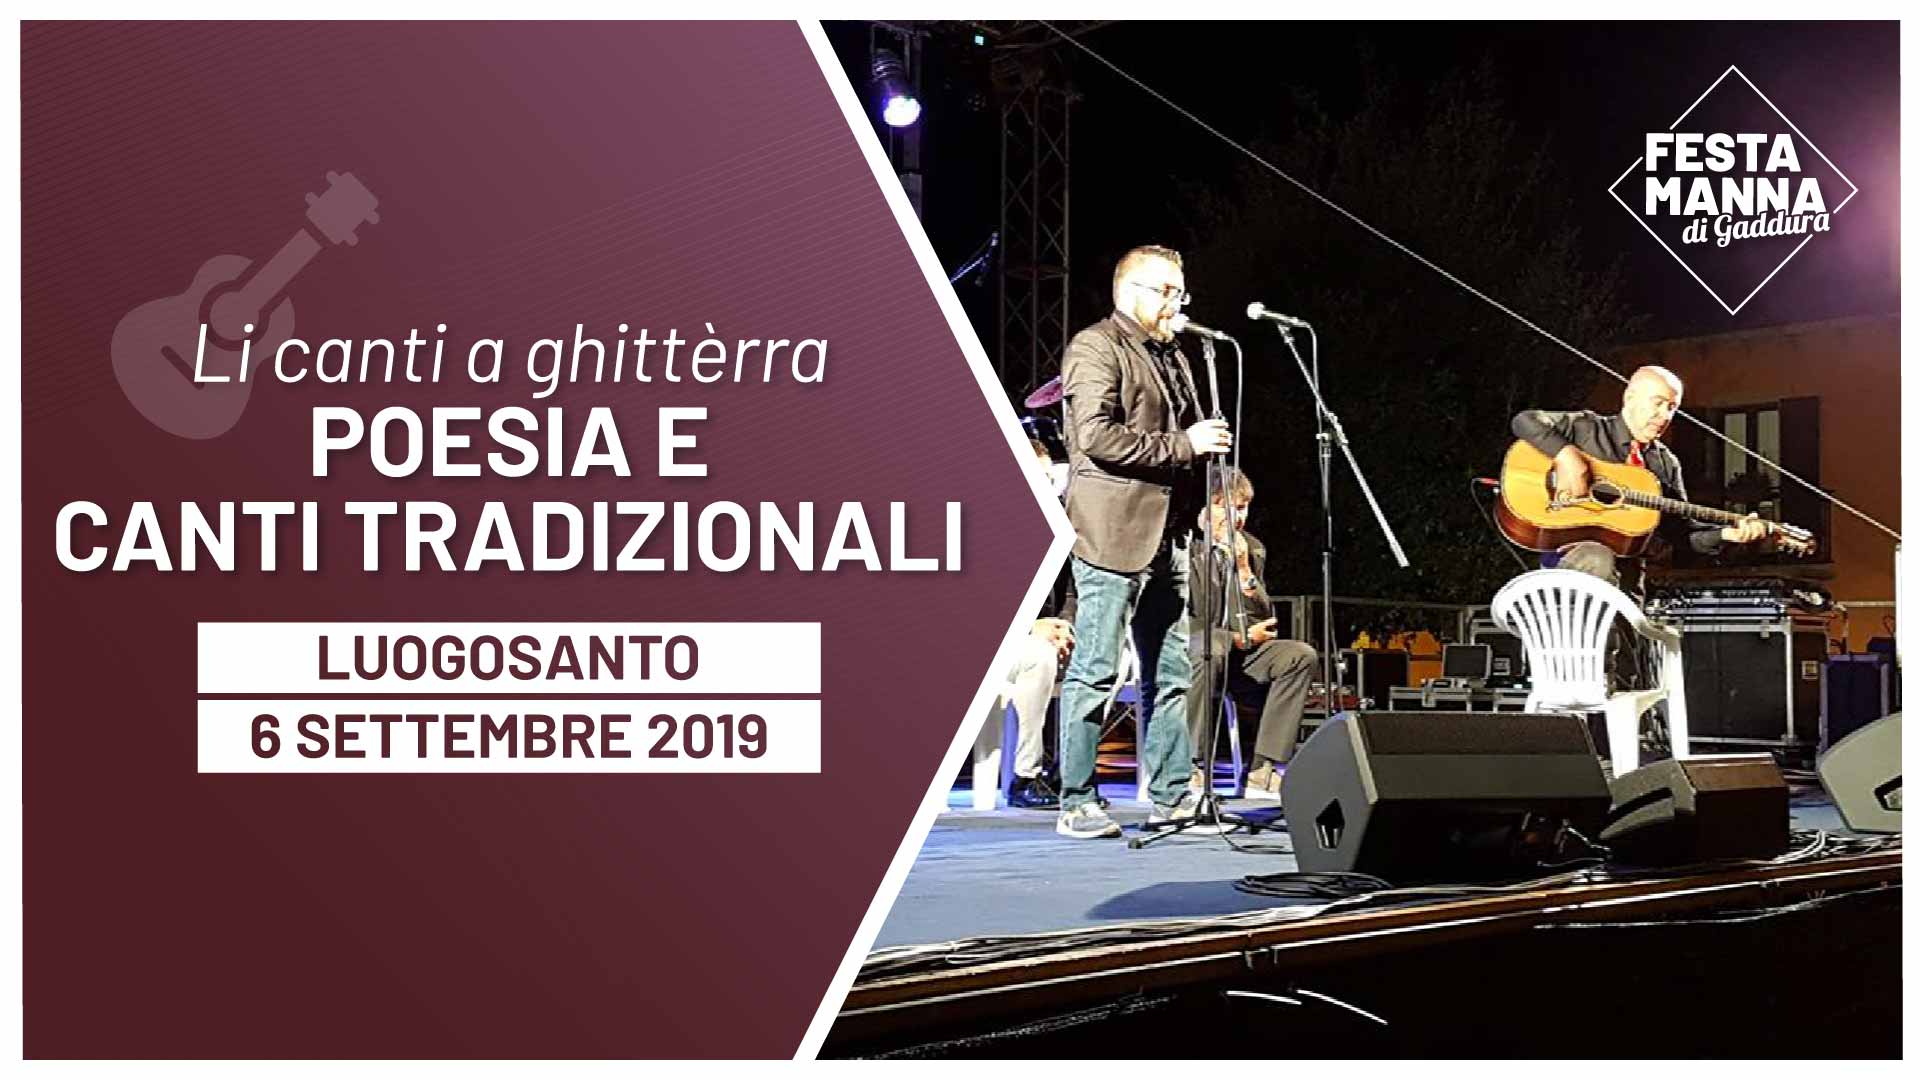 "Li canti a ghittèrra" música y canto tradicional gallurese | Festa Manna di Gaddura 2019